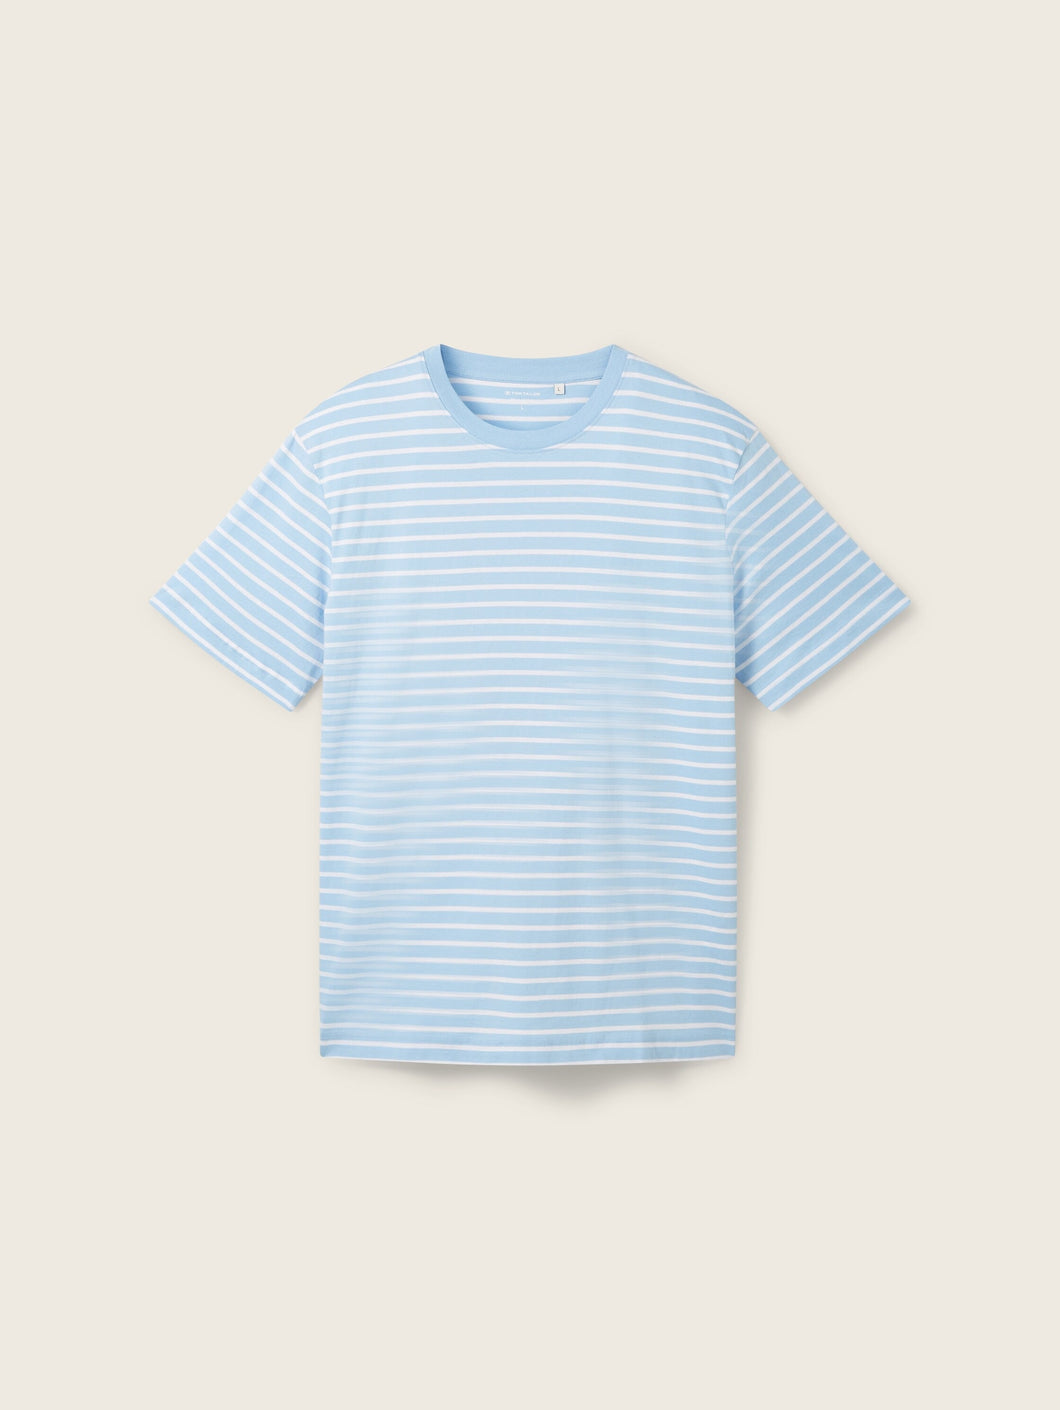 Tom Tailor Striped T-shirt | Hazy Coral Rose